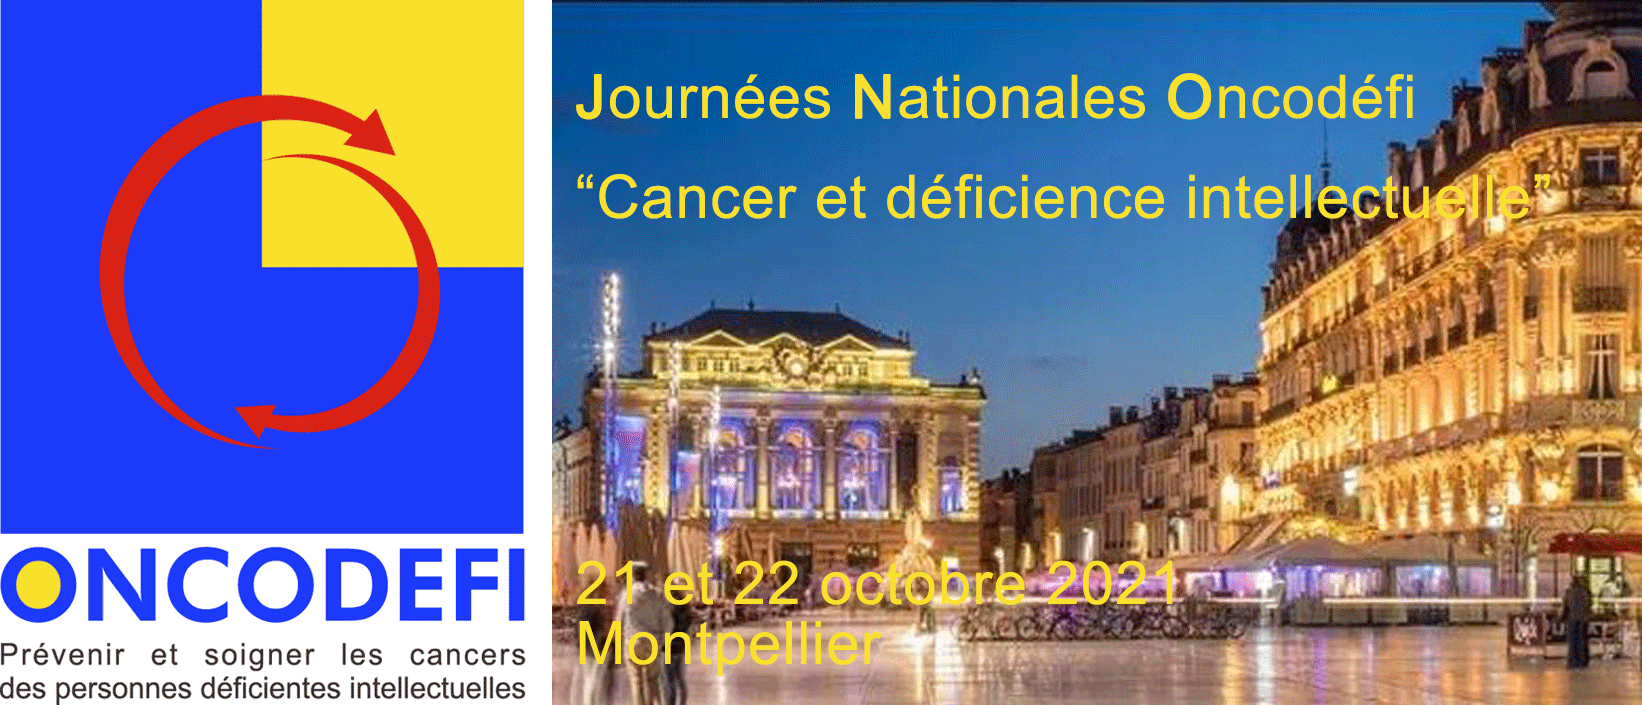 Journéee Nationale Oncodéfi